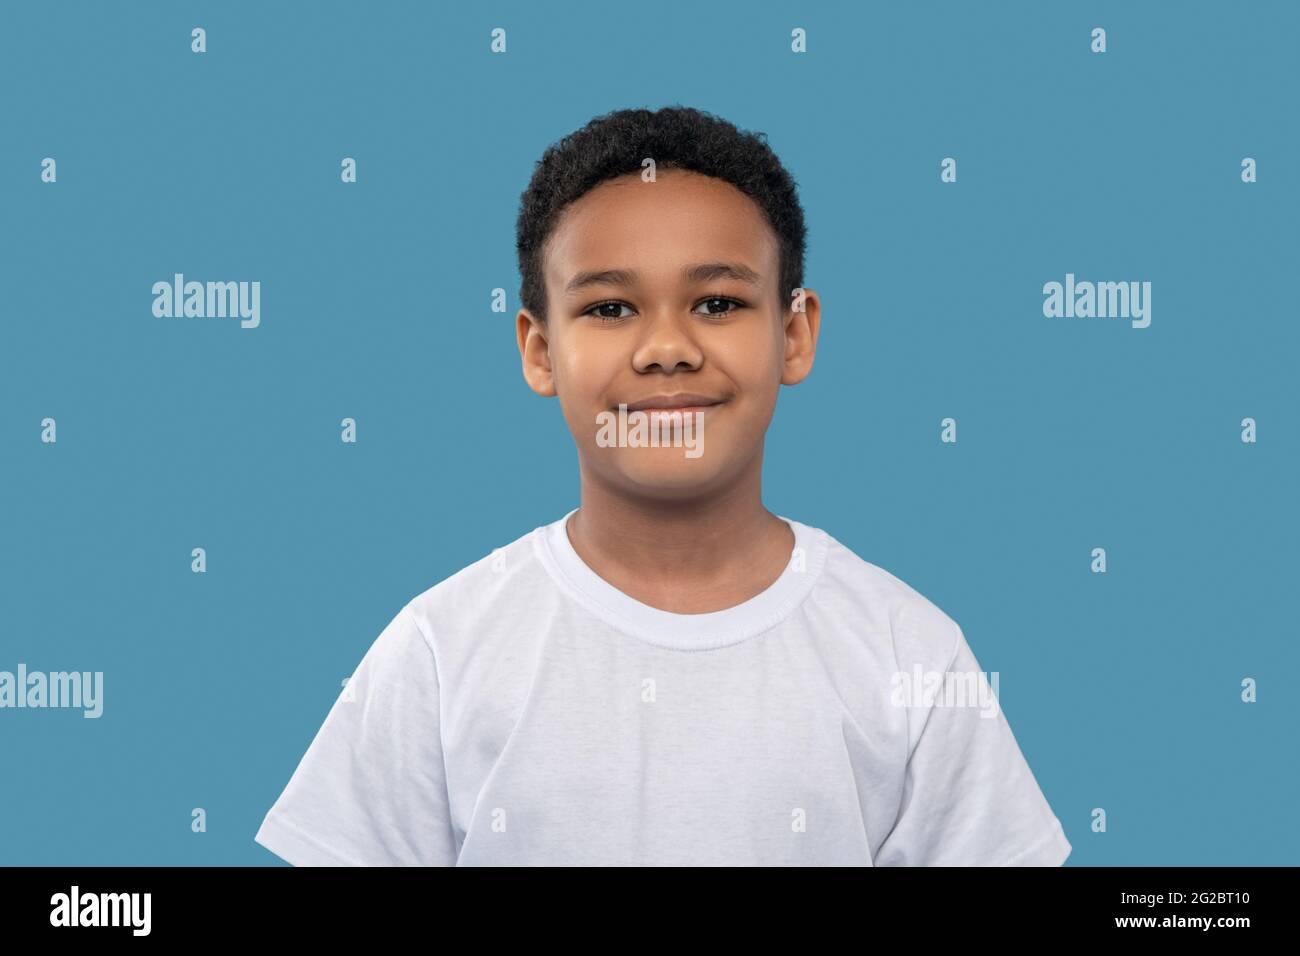 Smiling friendly dark-skinned boy on light blue background Stock Photo